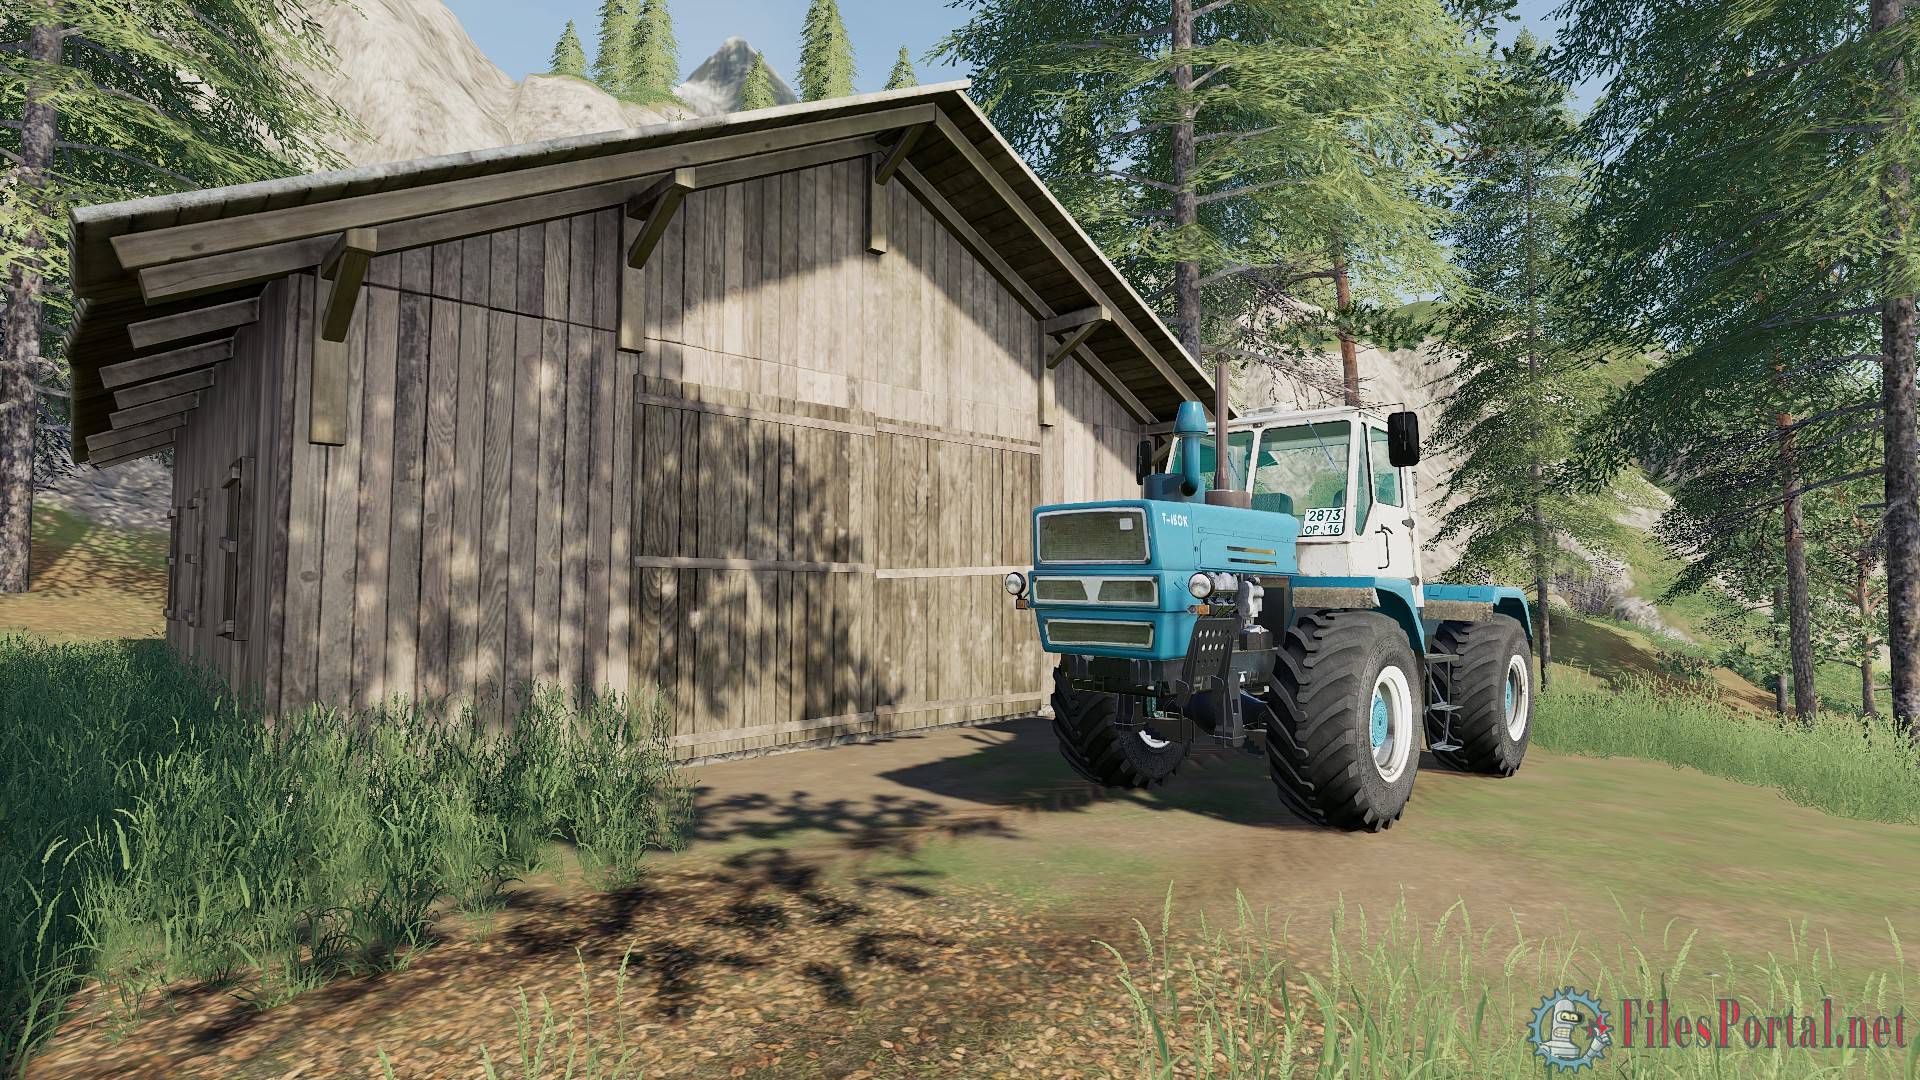 New farming simulator. Fs19_HTZ_t150_i. Т 150 для ФС 19. Т-150 трактор fs19. FS 15 Т 150 К.